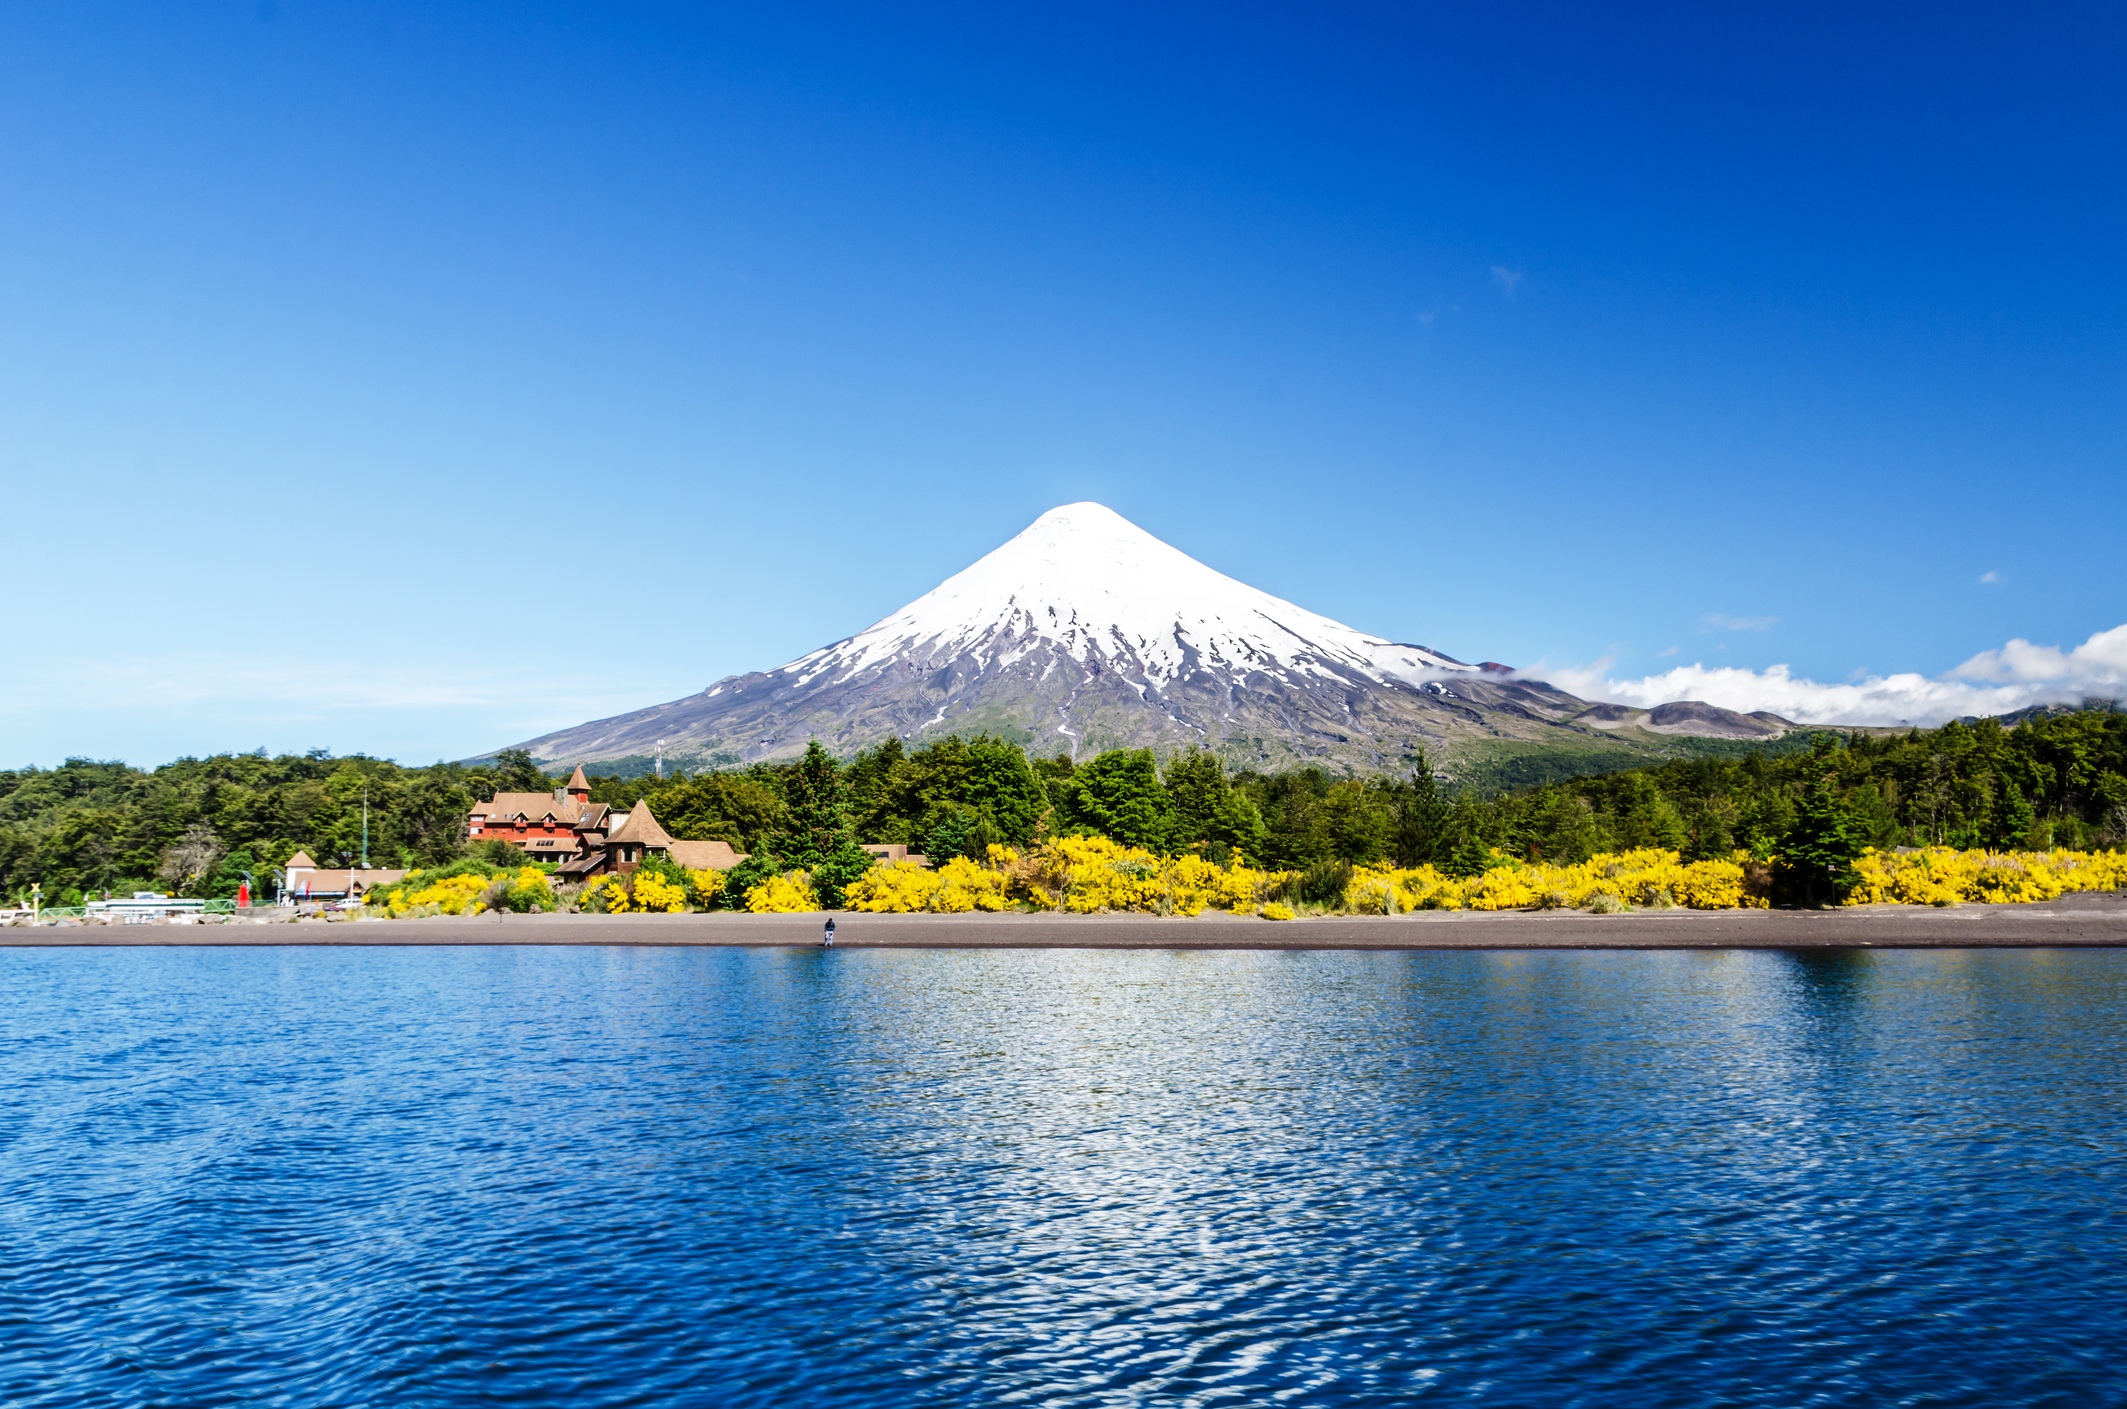 The Osorno volcano and Llanquihue Lake